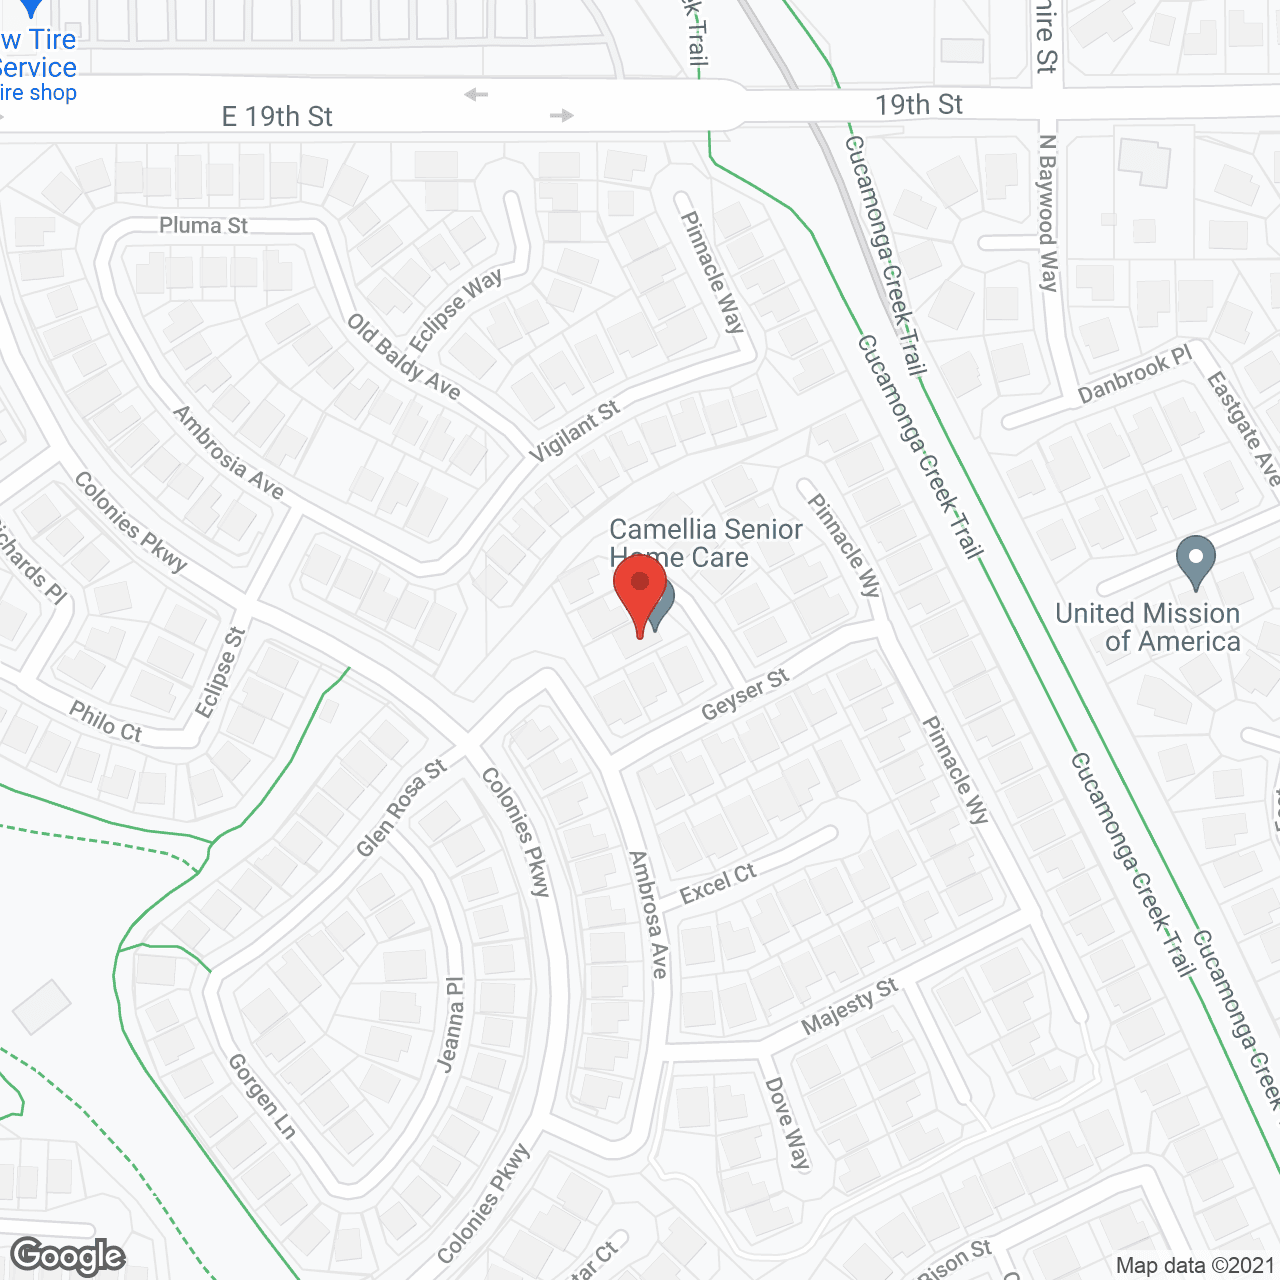 Camellia Senior Home Care in google map